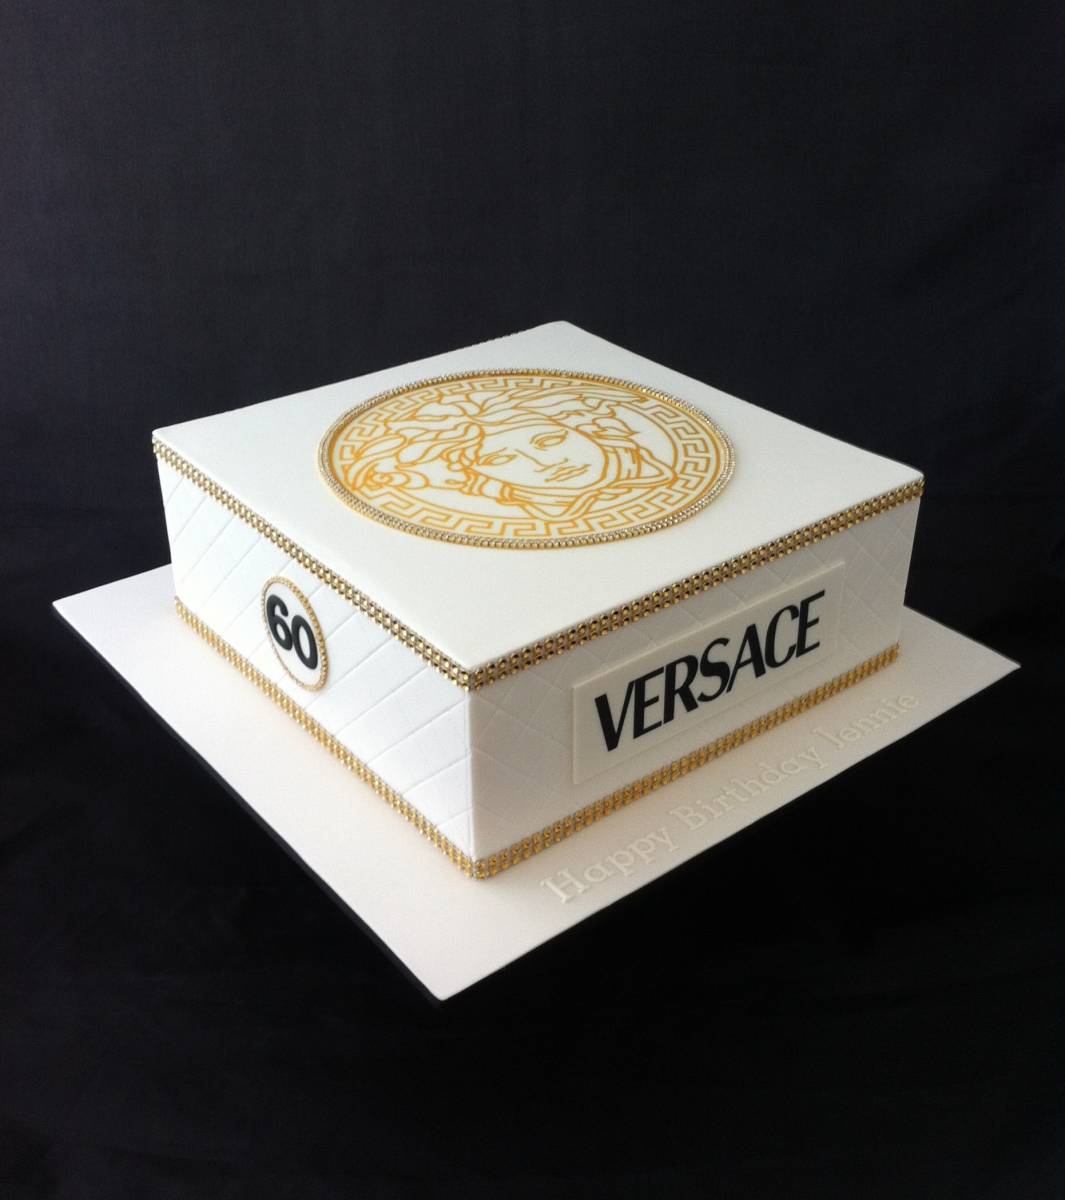 div class='content'h3 class='entry-title'Versace Cake (...